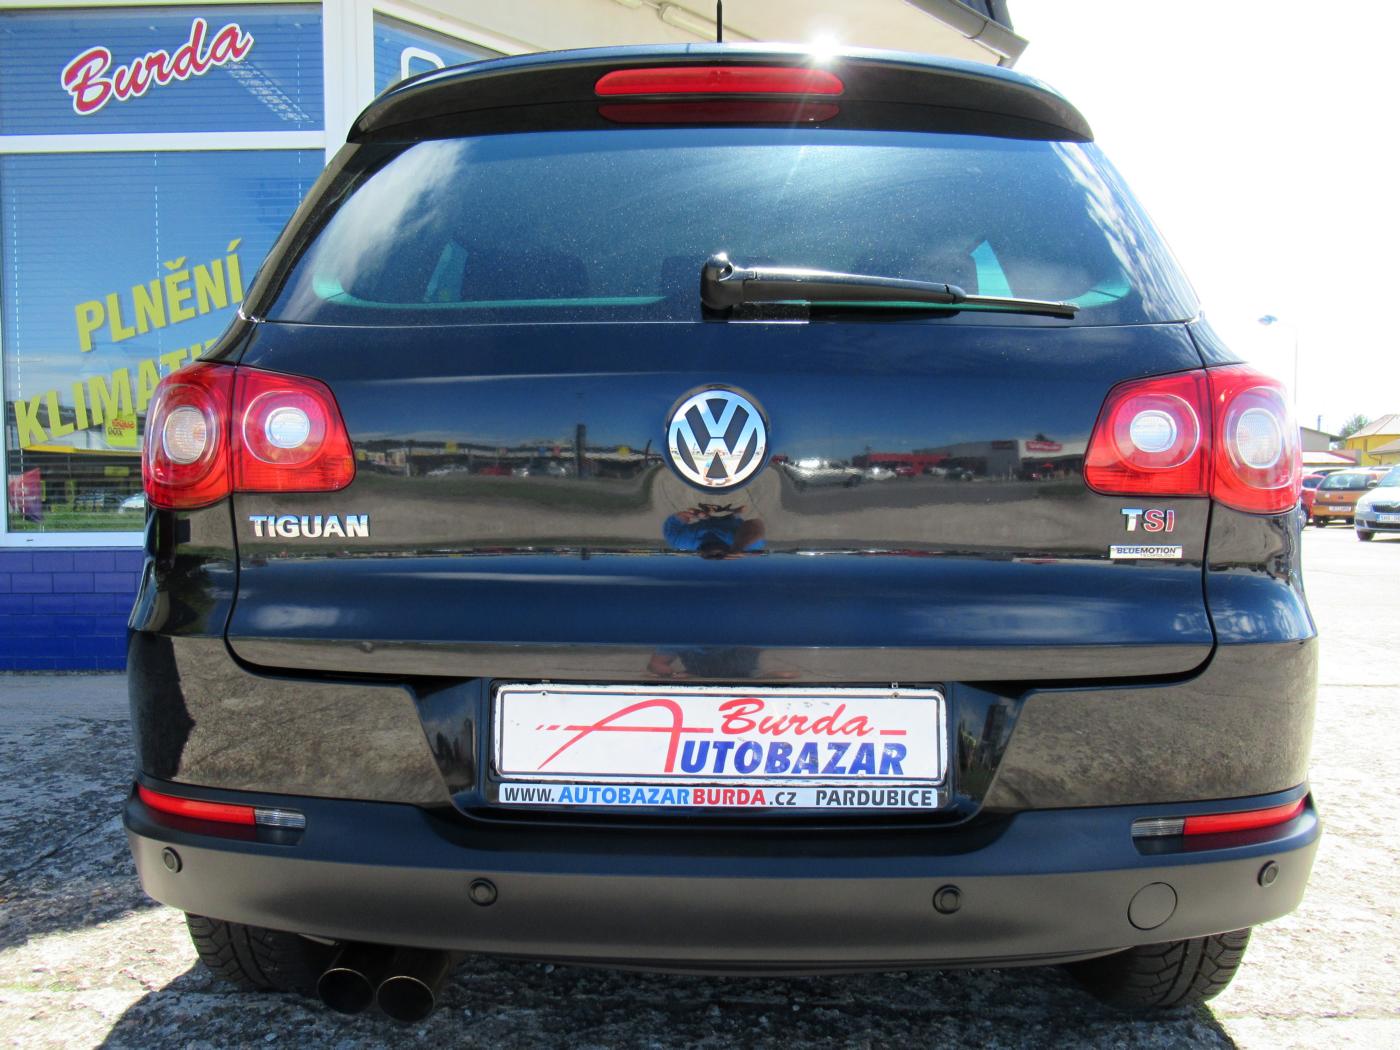 Volkswagen Tiguan 1,4 TSI Servisní knižka - Po rozvod